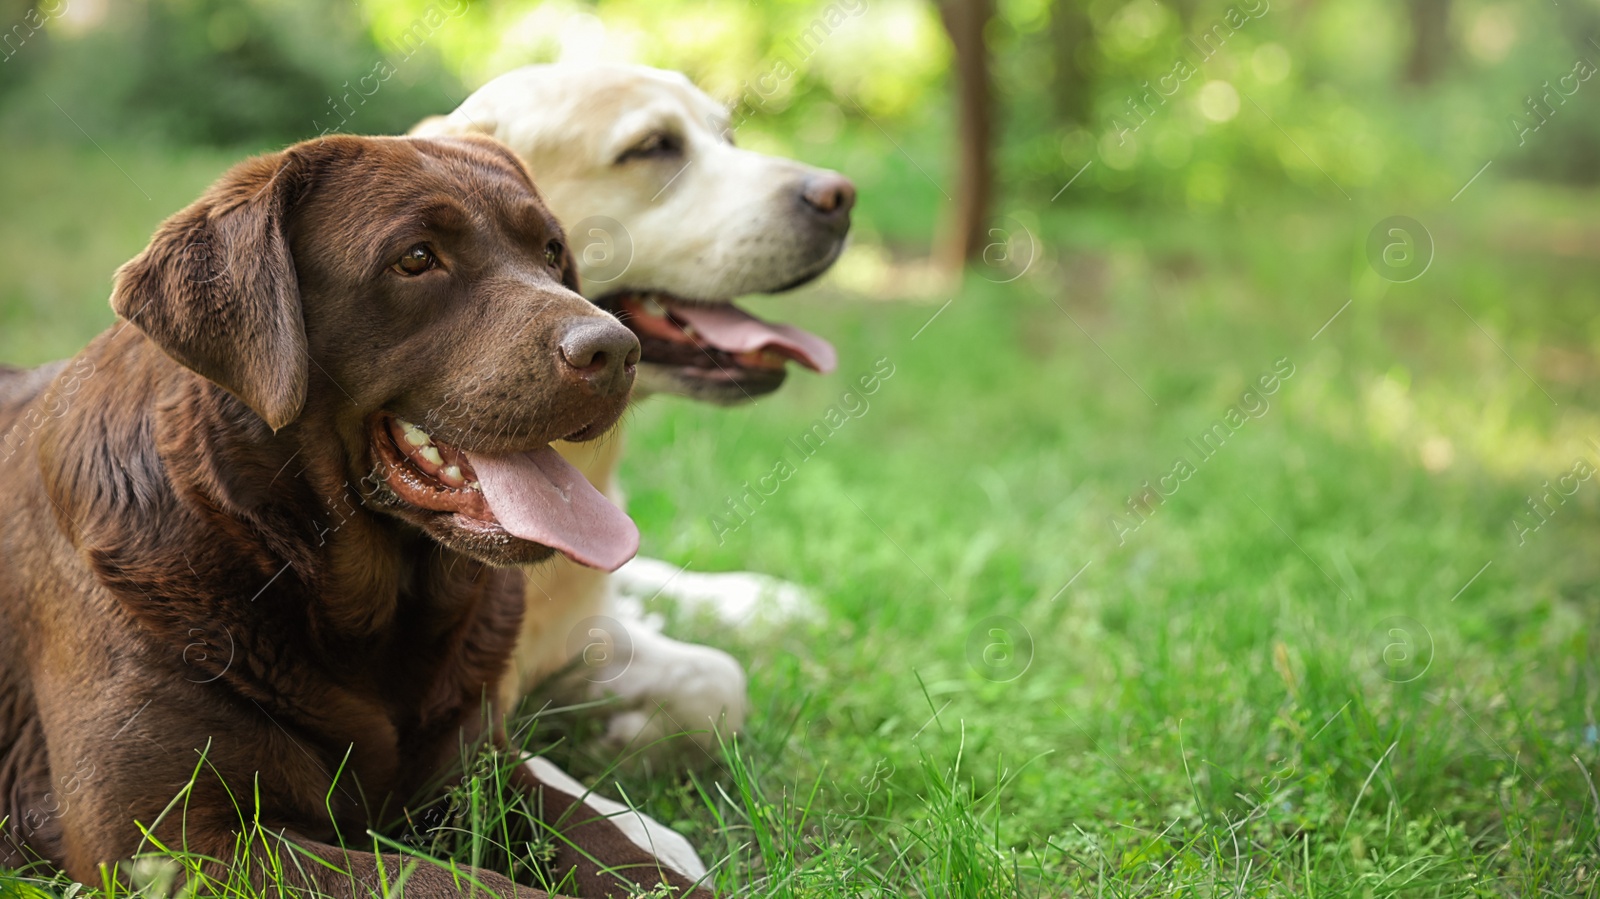 Photo of Funny Labrador Retriever dogs in green summer park